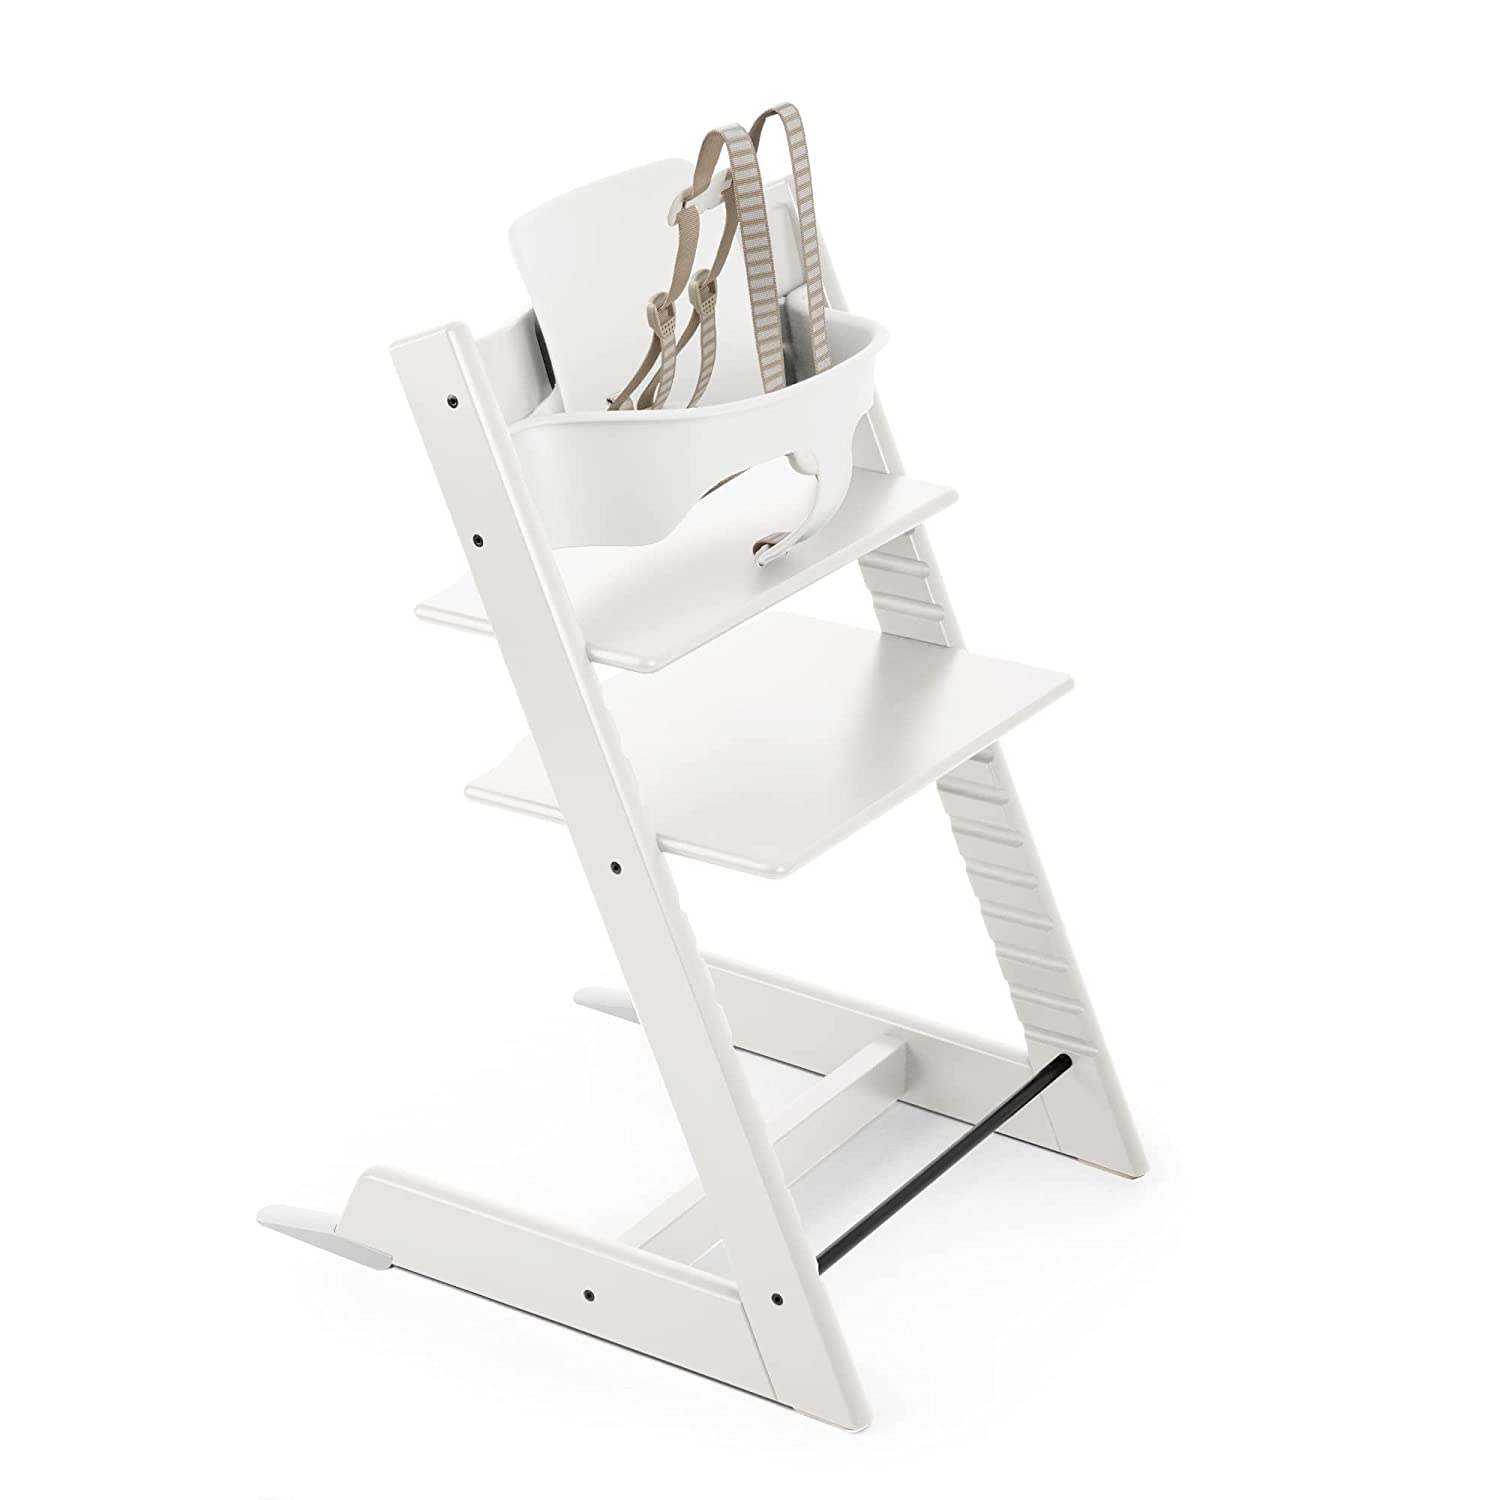 Пластиковая вставка Stokke Baby Set для стульчика Tripp Trapp White, белый